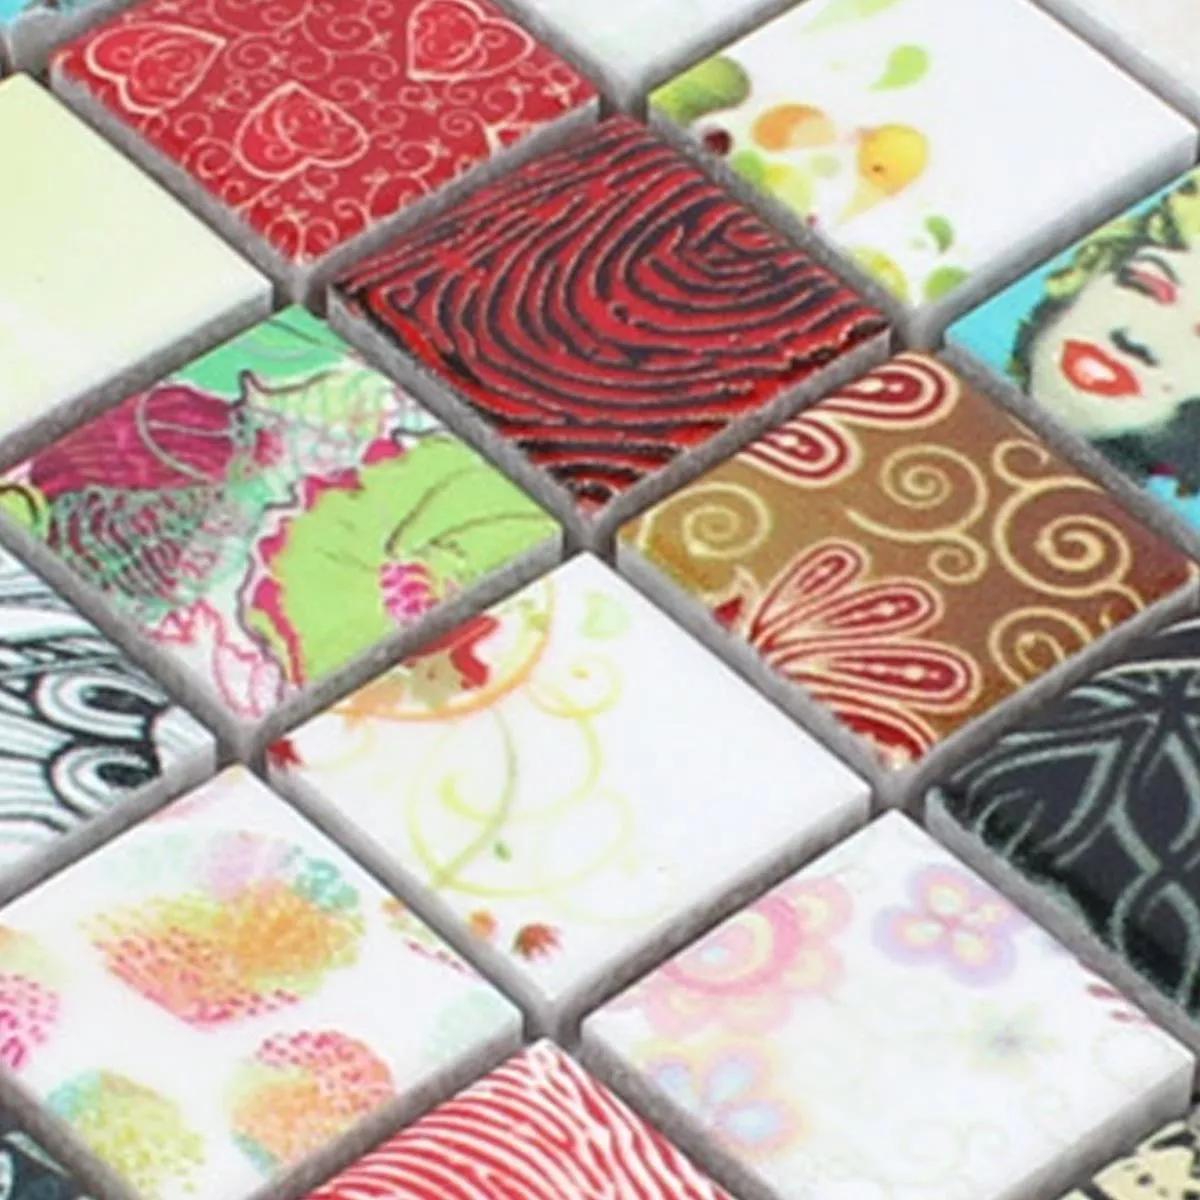 Sample Mosaic Tiles Ceramic Dia Colored